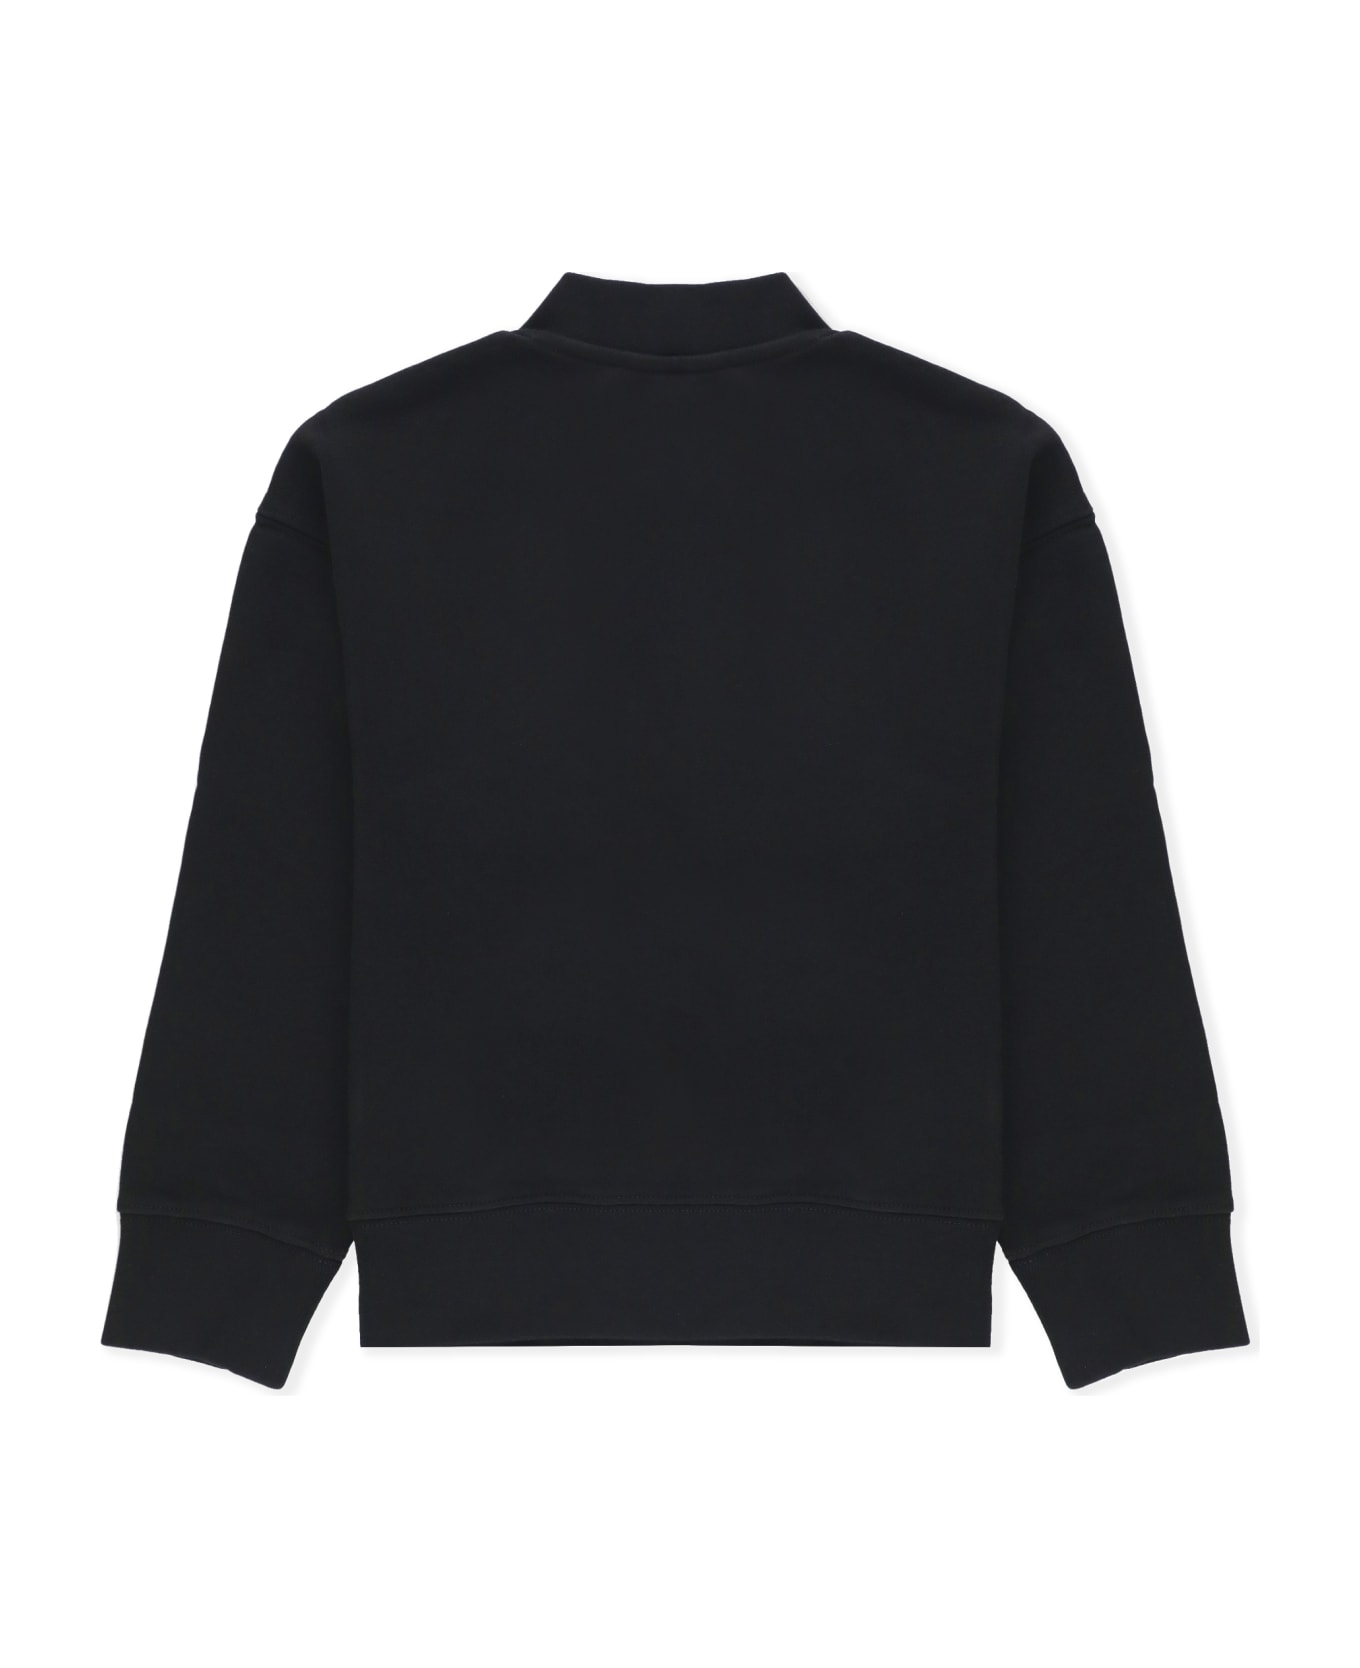 Palm Angels Cotton Sweatshirt - Black